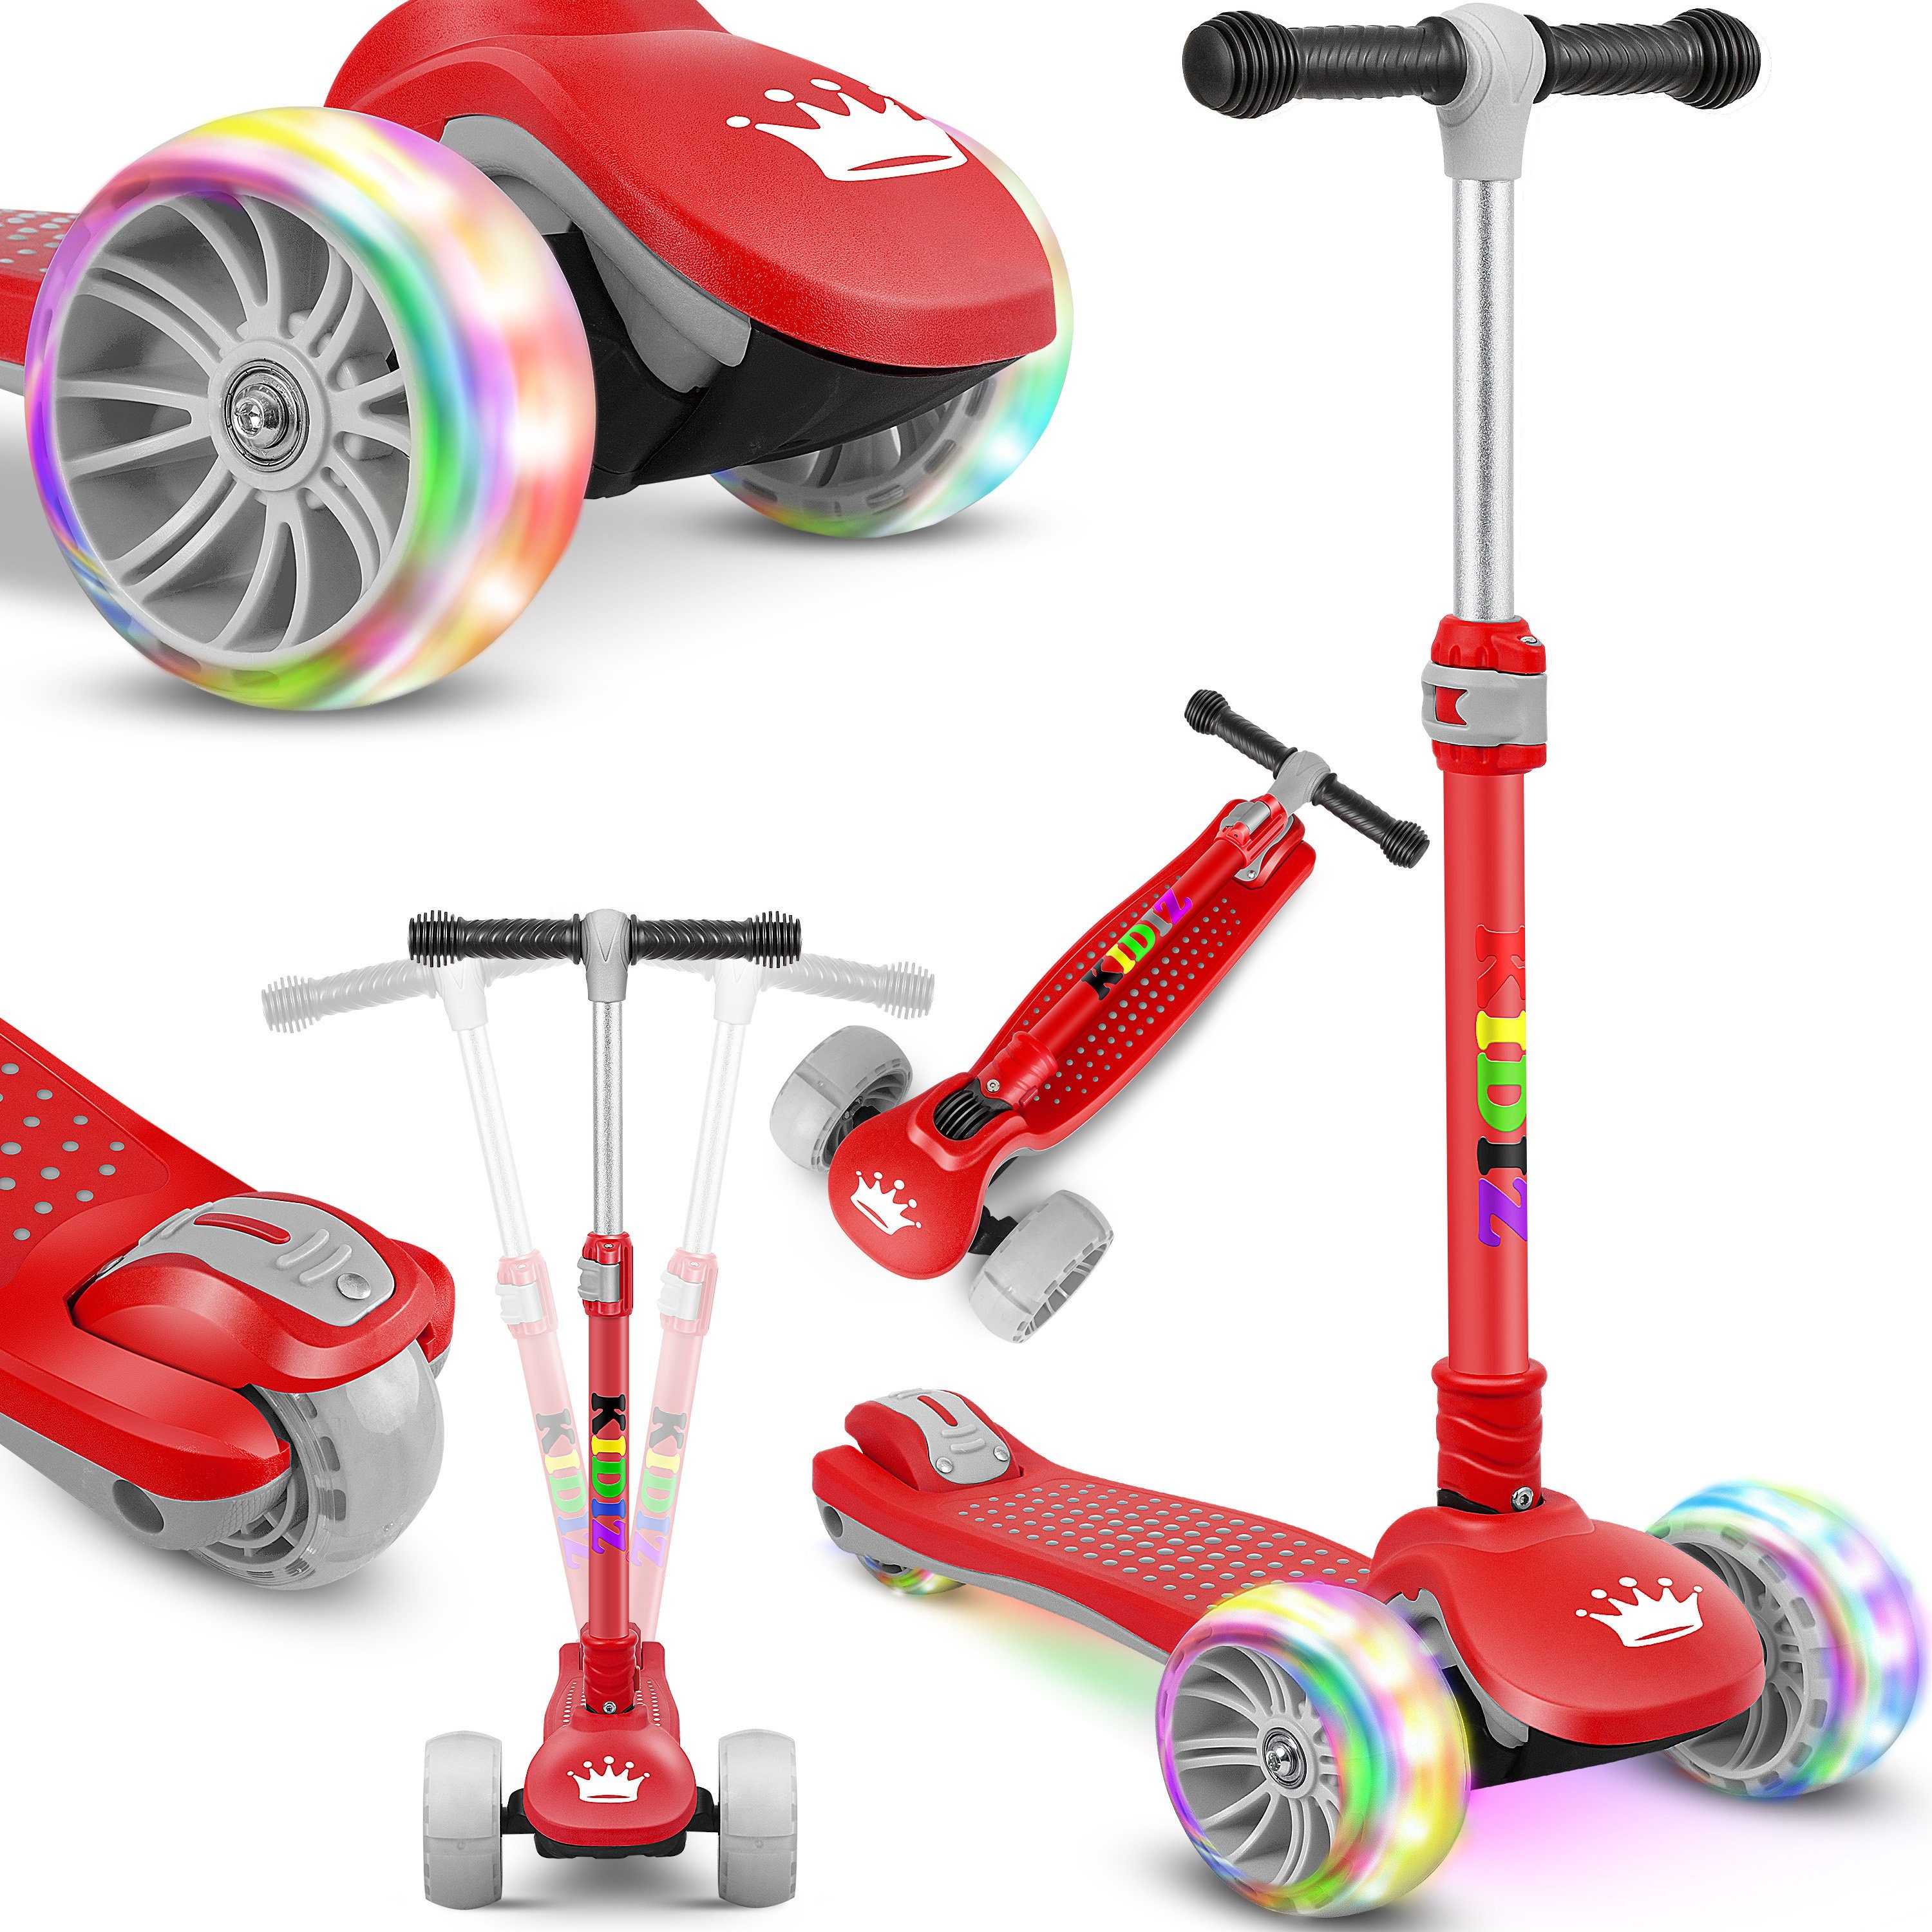 Kinderroller LED Tretroller Cityroller Verstellbar Dreirad Scooter Roller Neu 